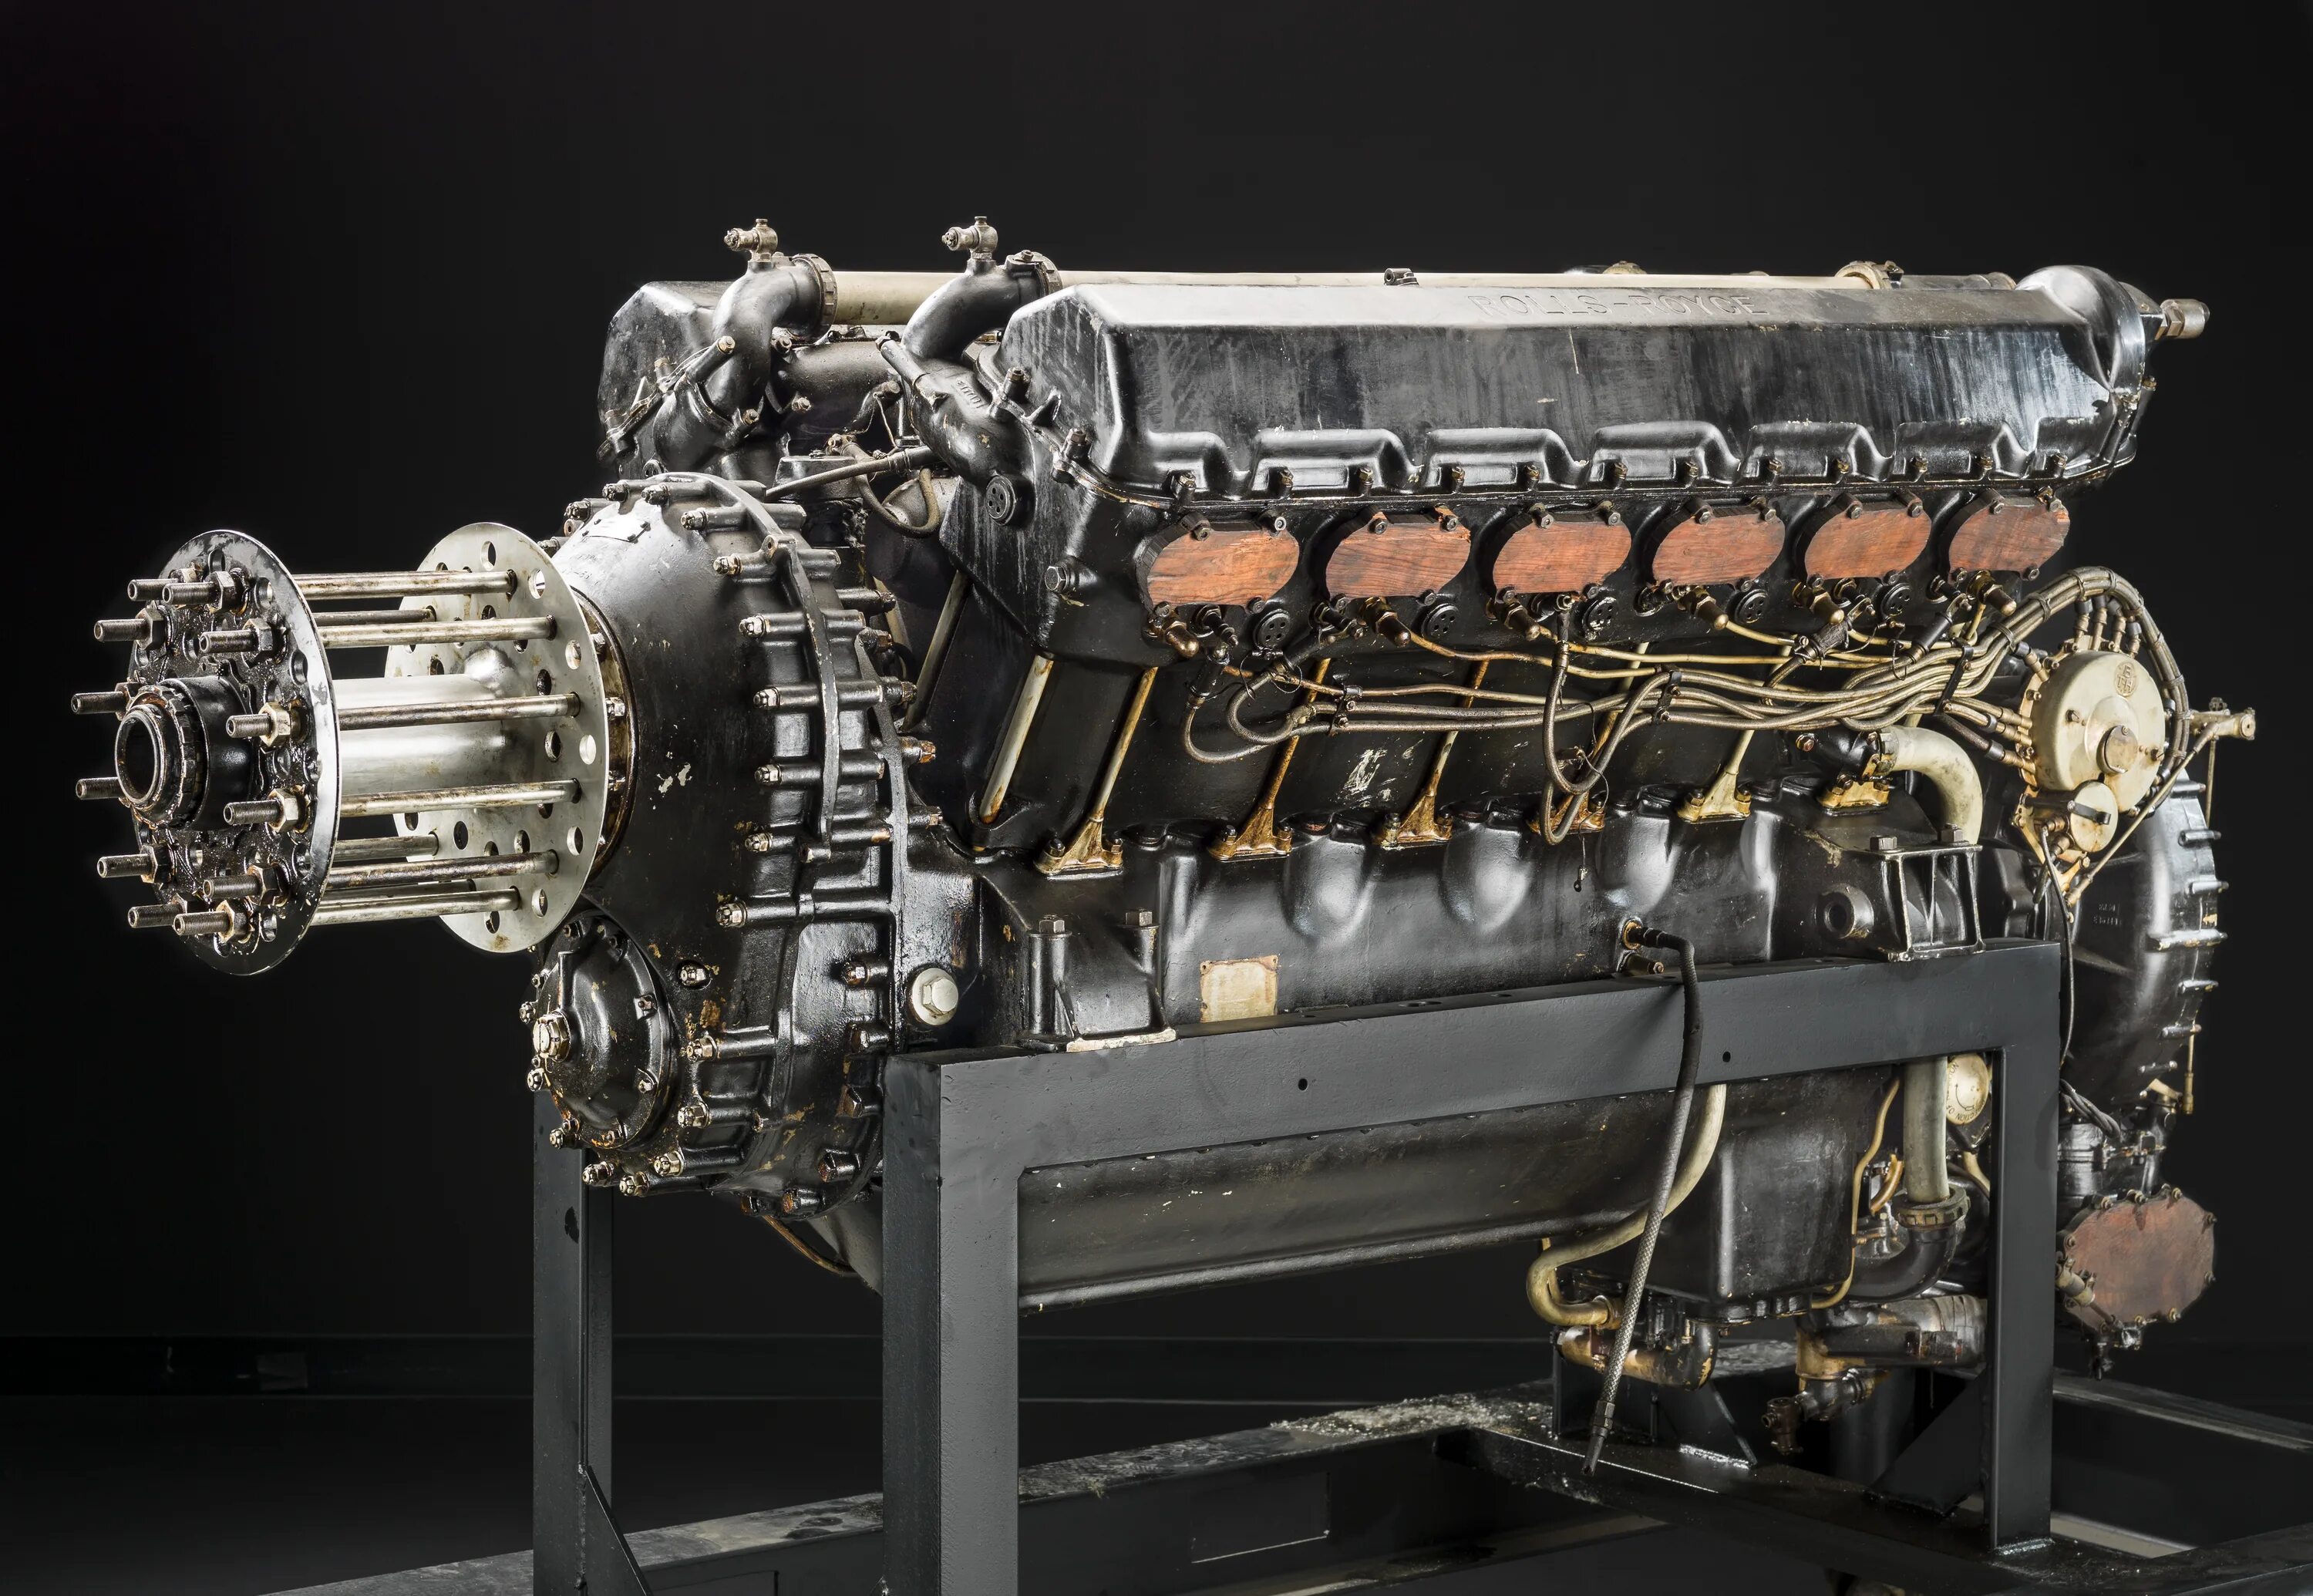 Двигатель роллс ройс. Мотор Роллс Ройс. Двигатель Rolls-Royce v12. Роллс Ройс авиадвигатель v12. Rolls-Royce Kestrel.